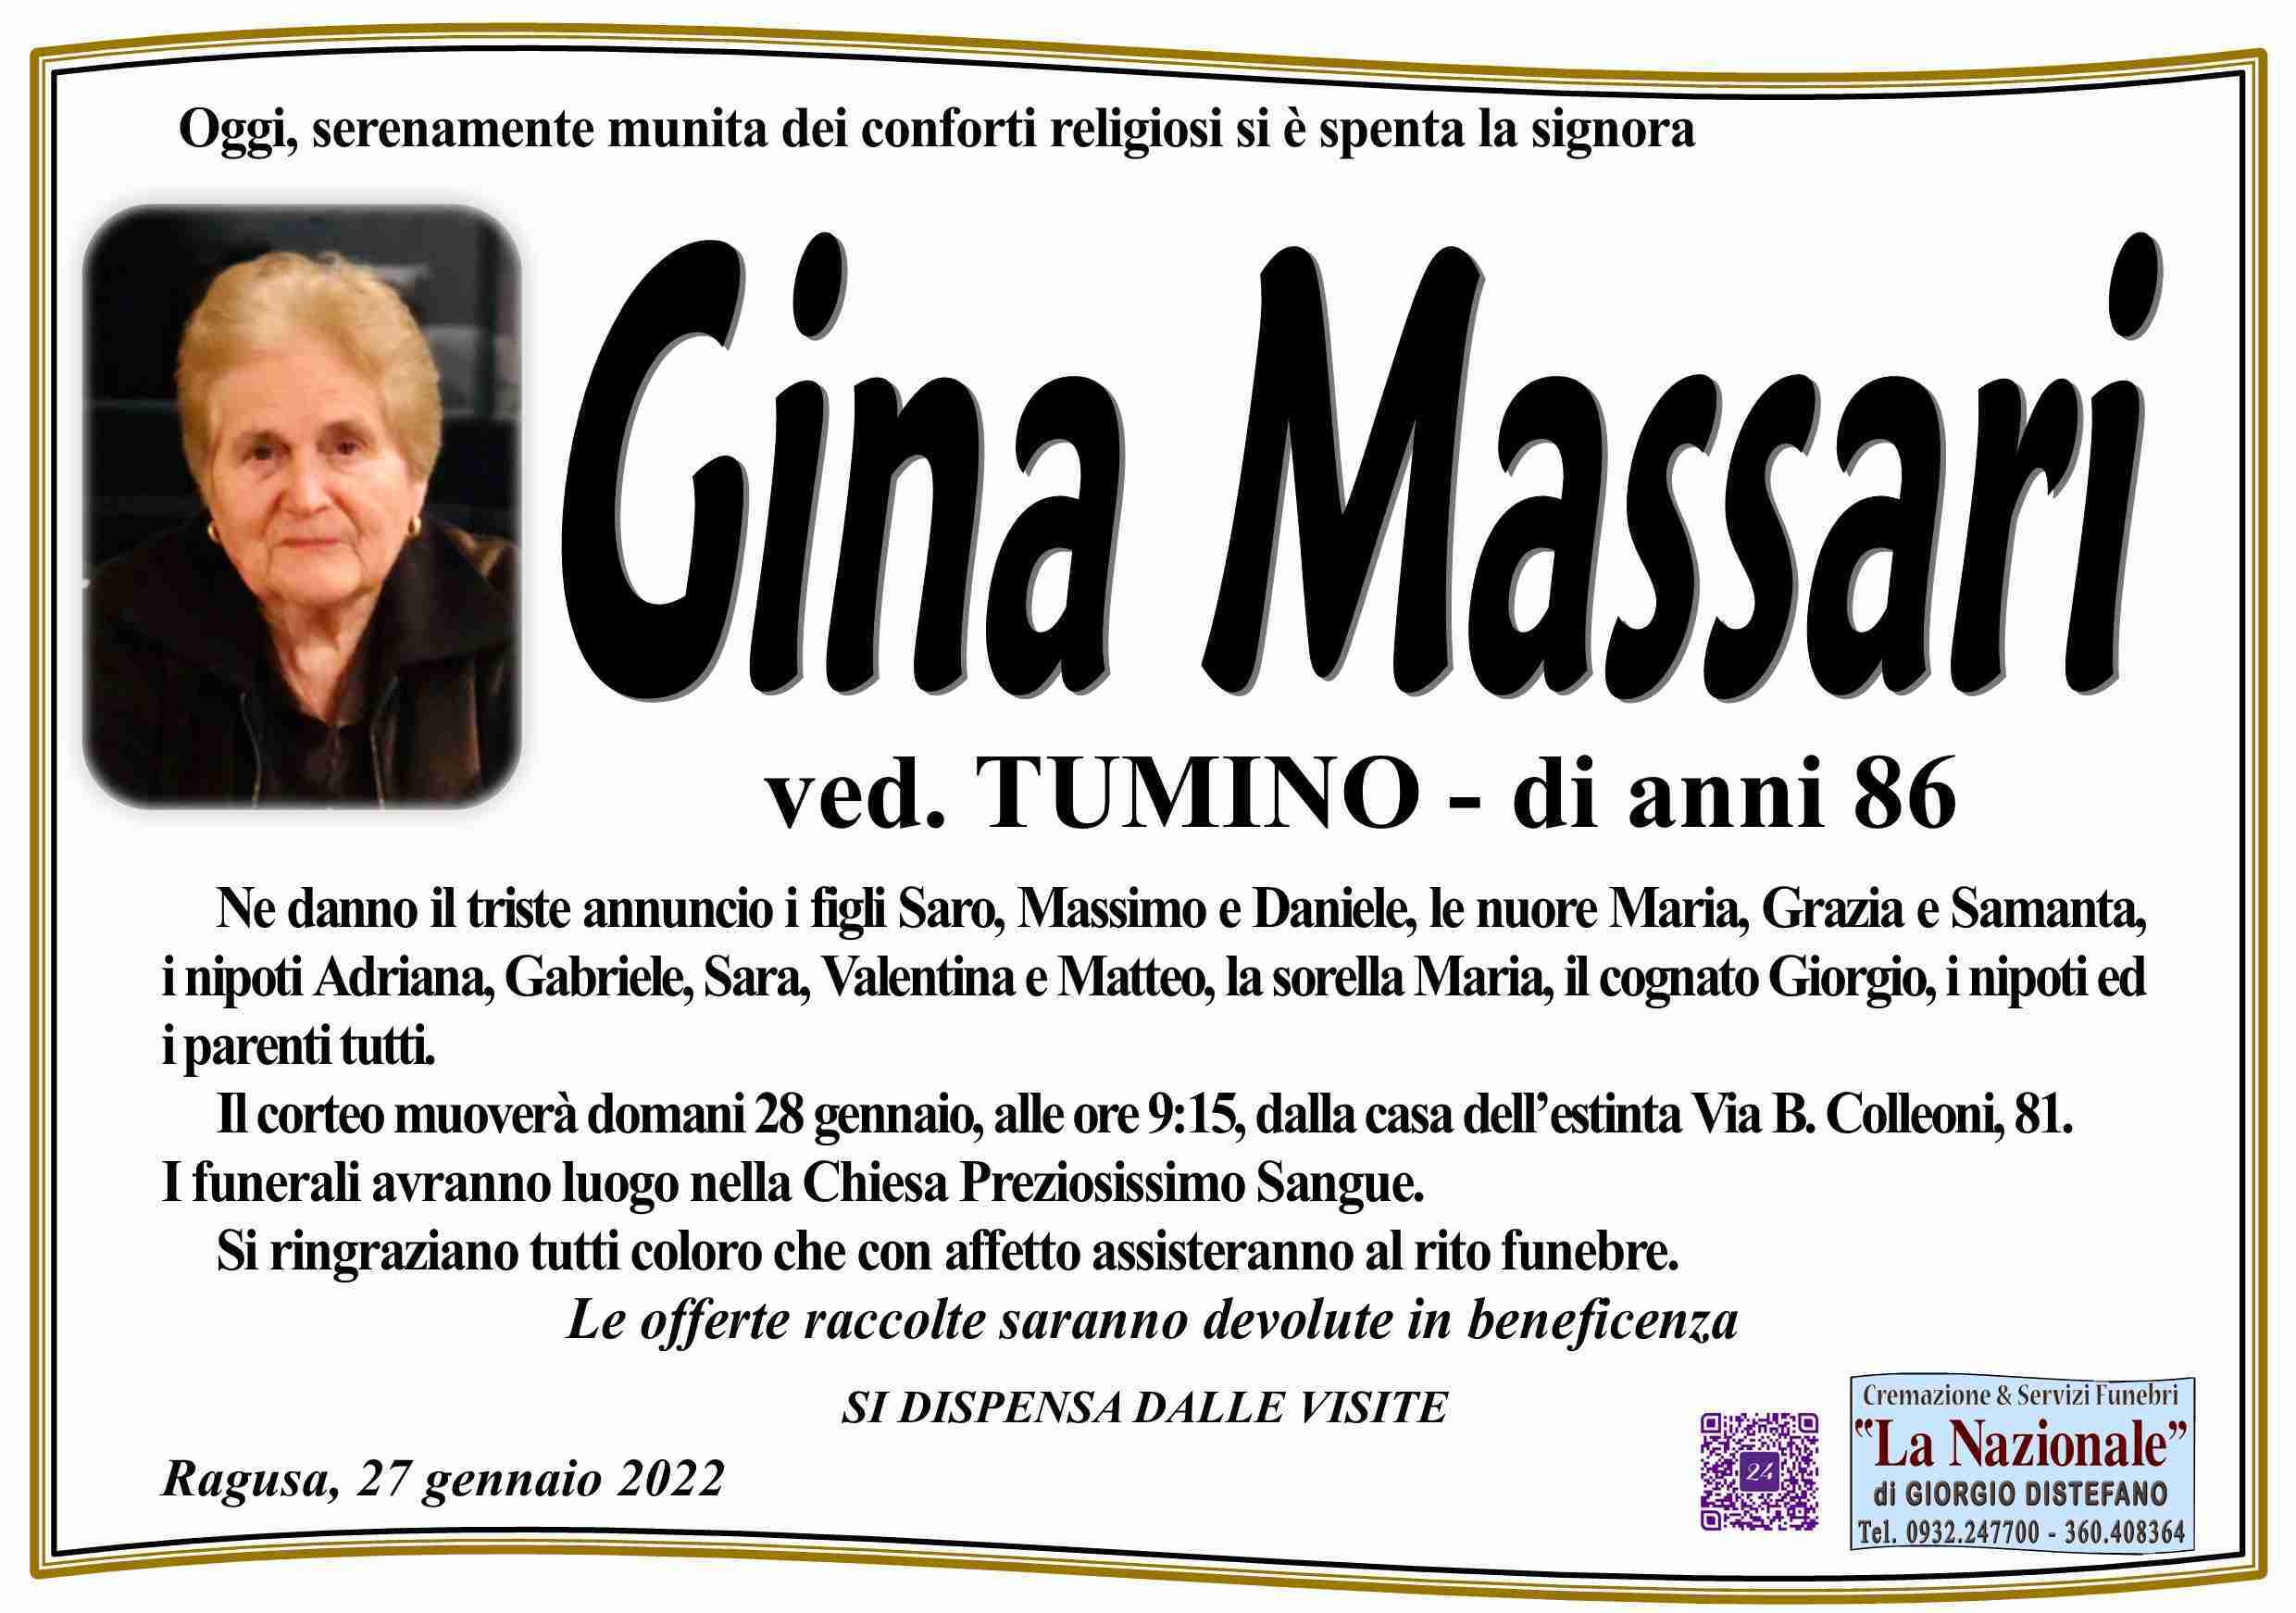 Giorgia Massari